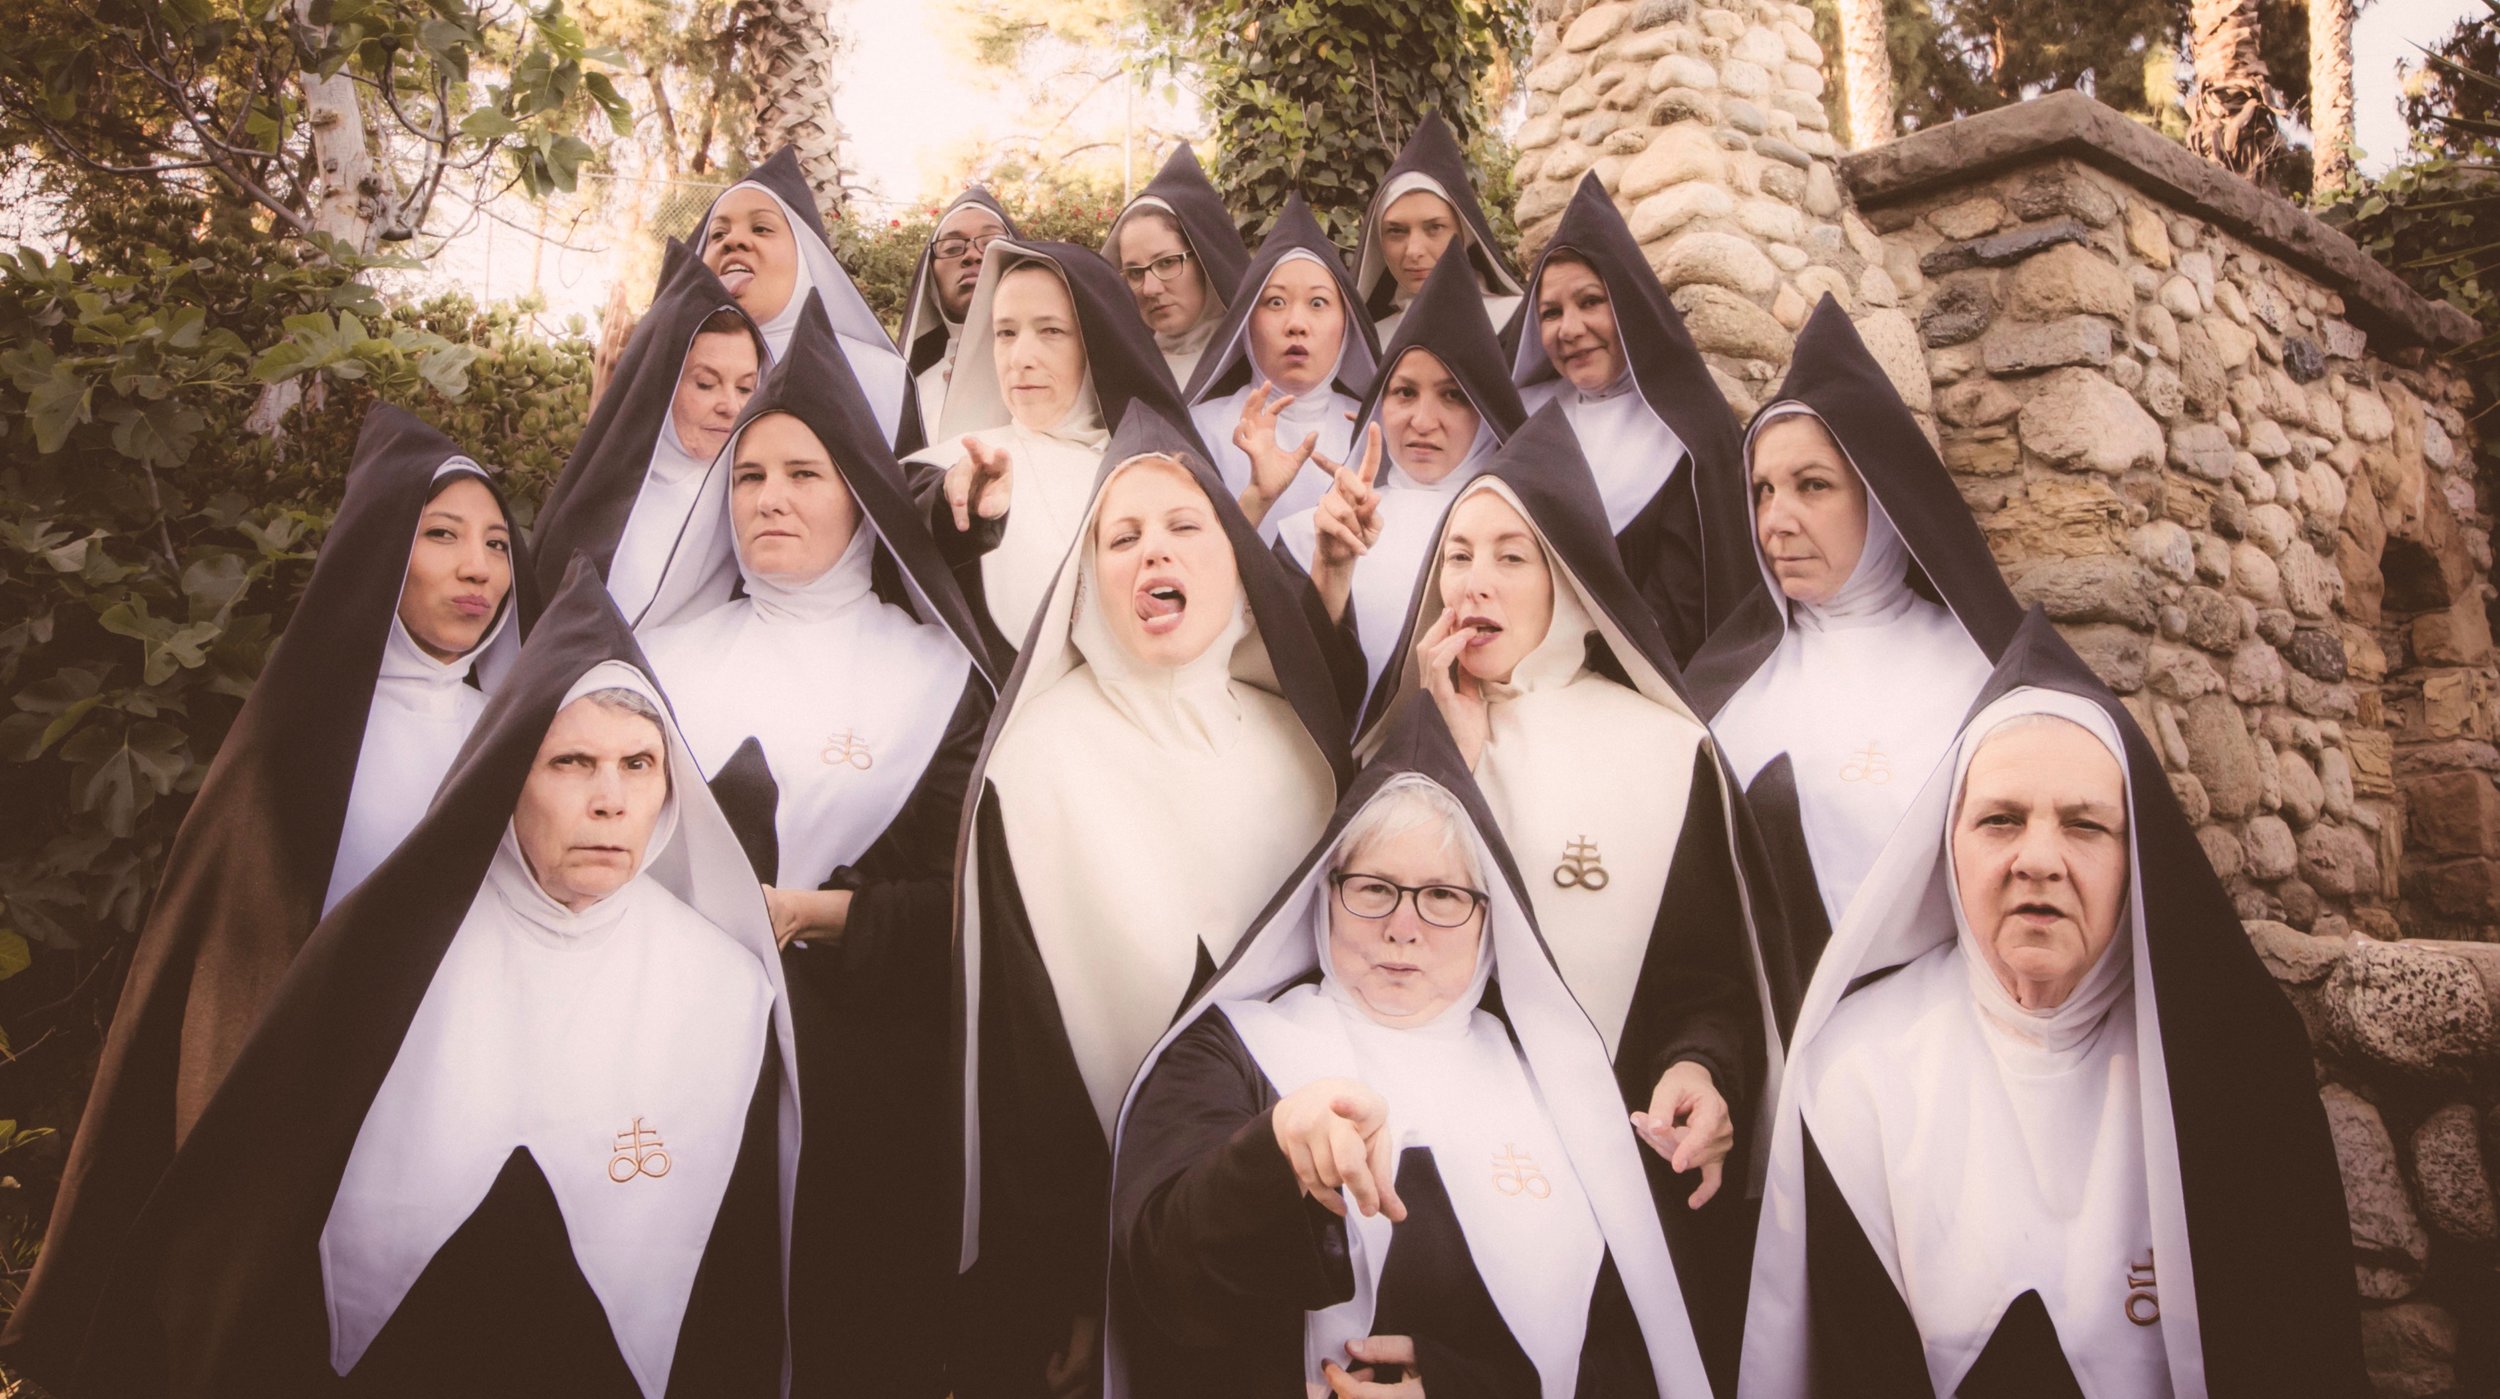 8 Good omens chattering nuns hal kirkland.jpeg